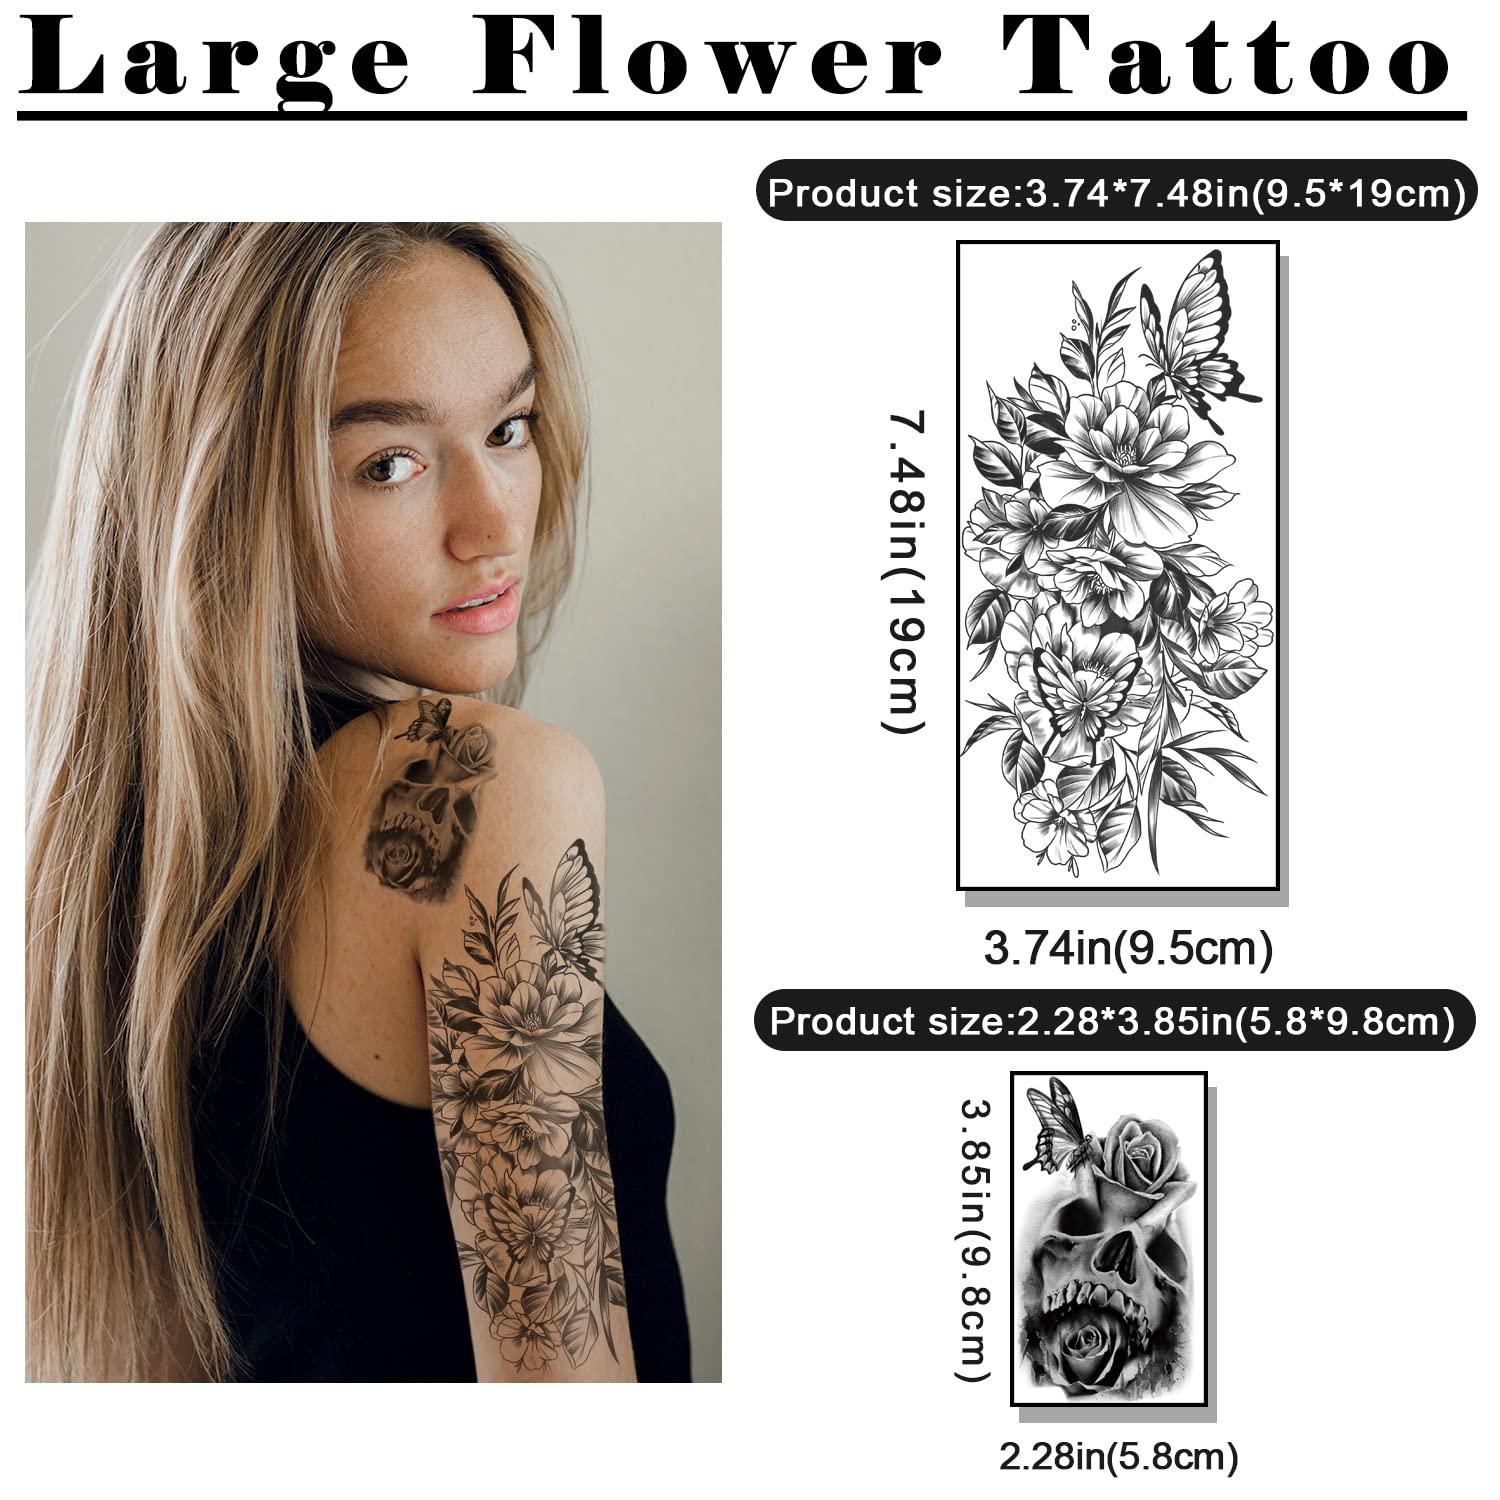 wolf tattoo girl arm